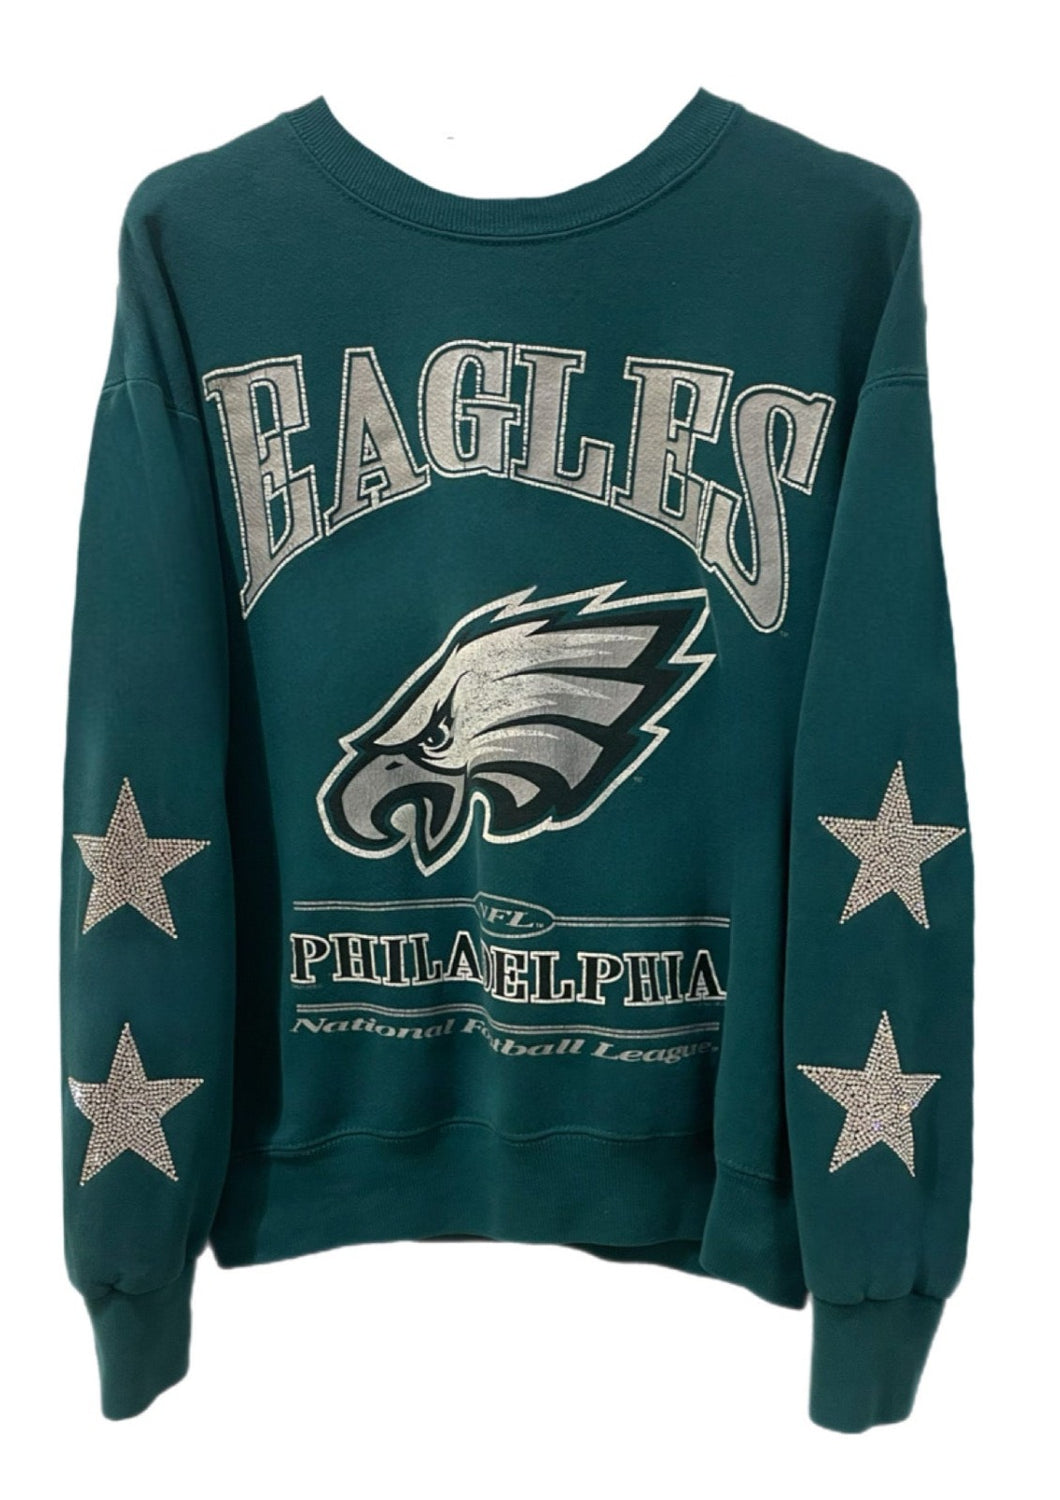 Philadelphia Eagles, Football One of a KIND Vintage Sweatshirt with Crystal Star Design